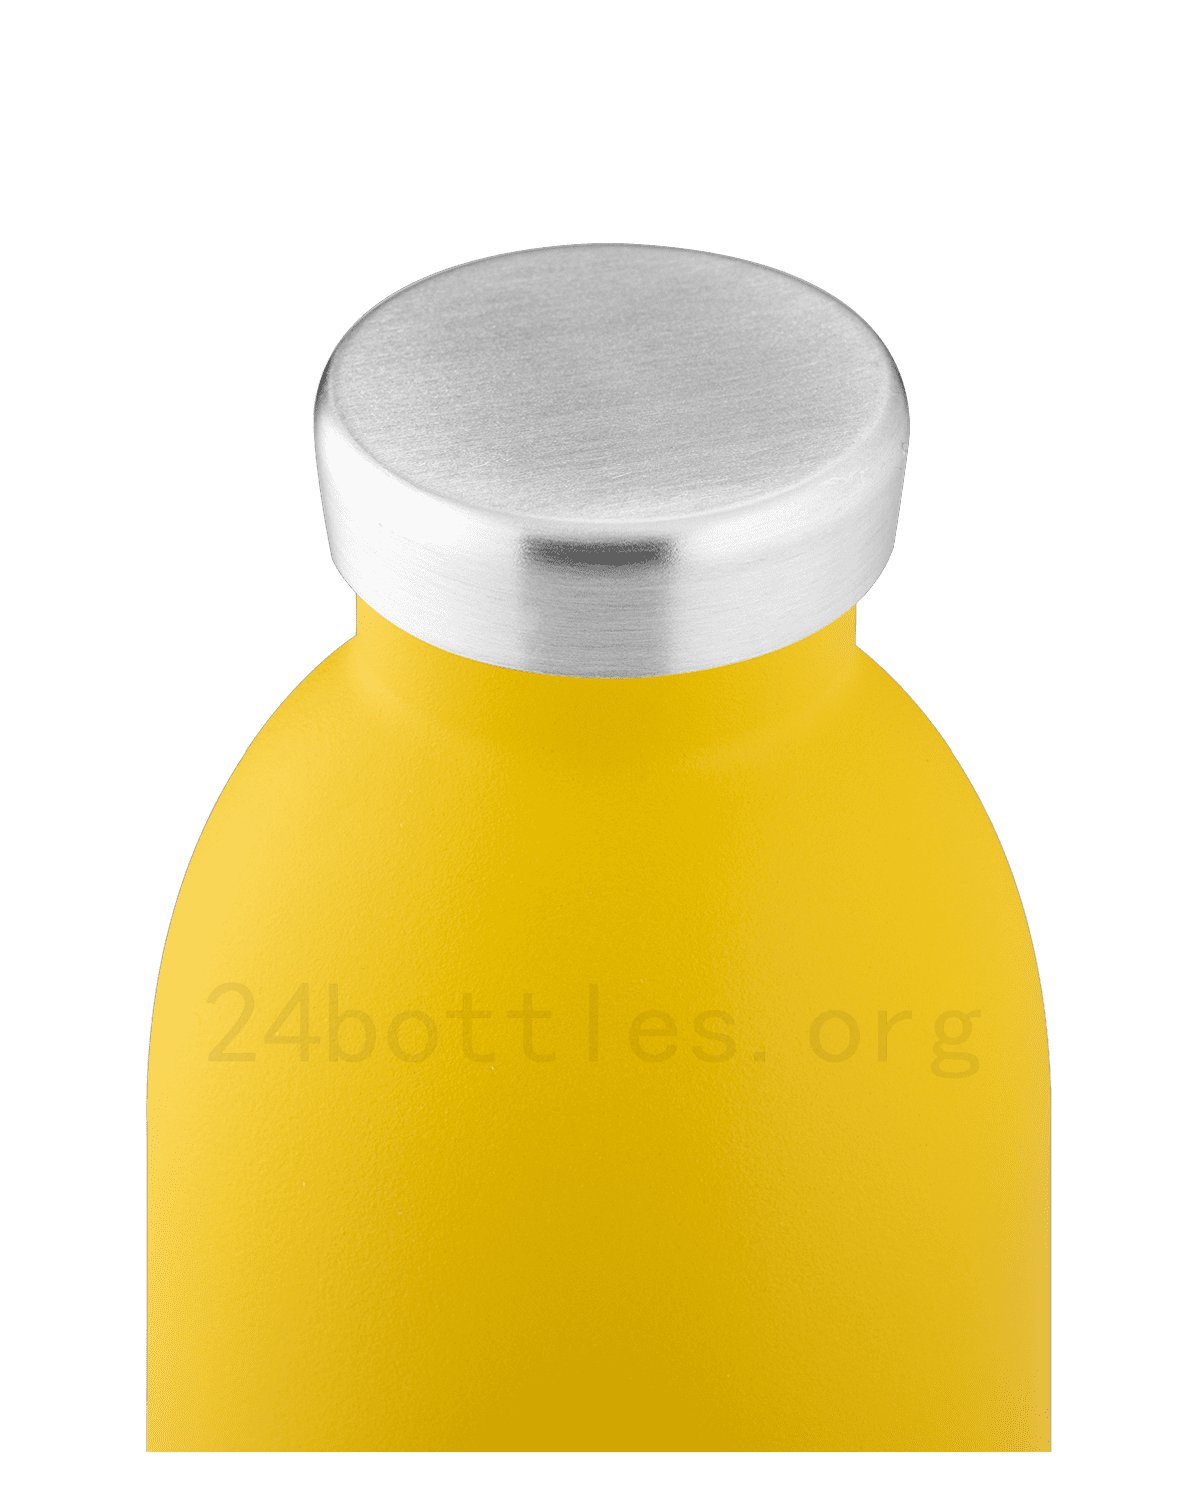 Taxi Yellow - 500 ml borracce acciaio inox